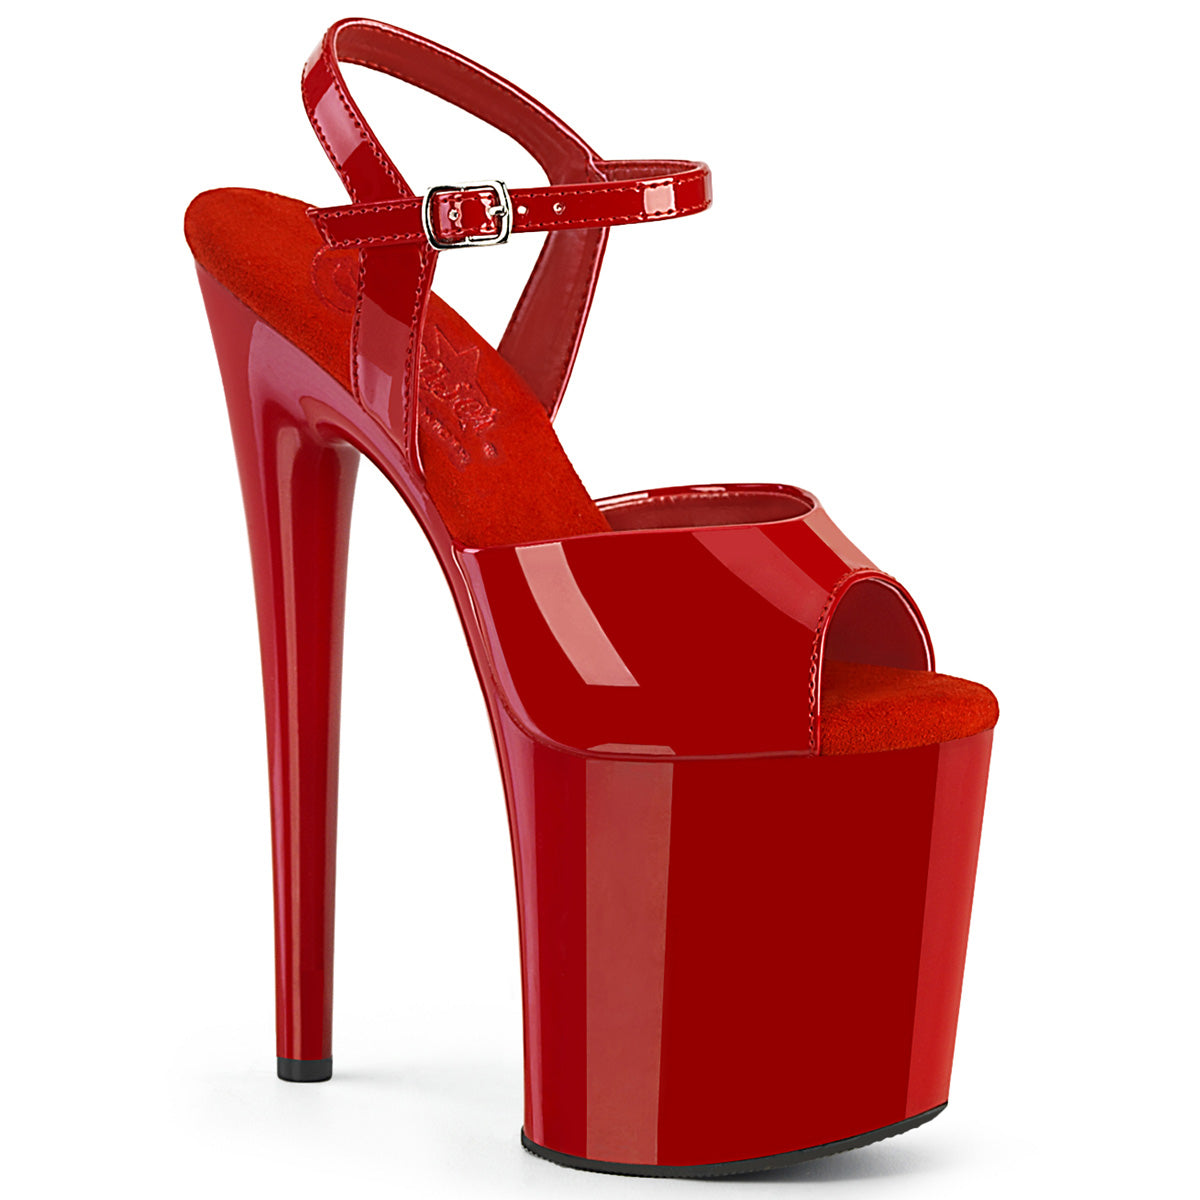 Pleaser NAUGHTY-809 Red Pat 8 Inch (200mm) Heel, 4 Inch (100mm) Platform Comfort Width Ankle Strap Sandal